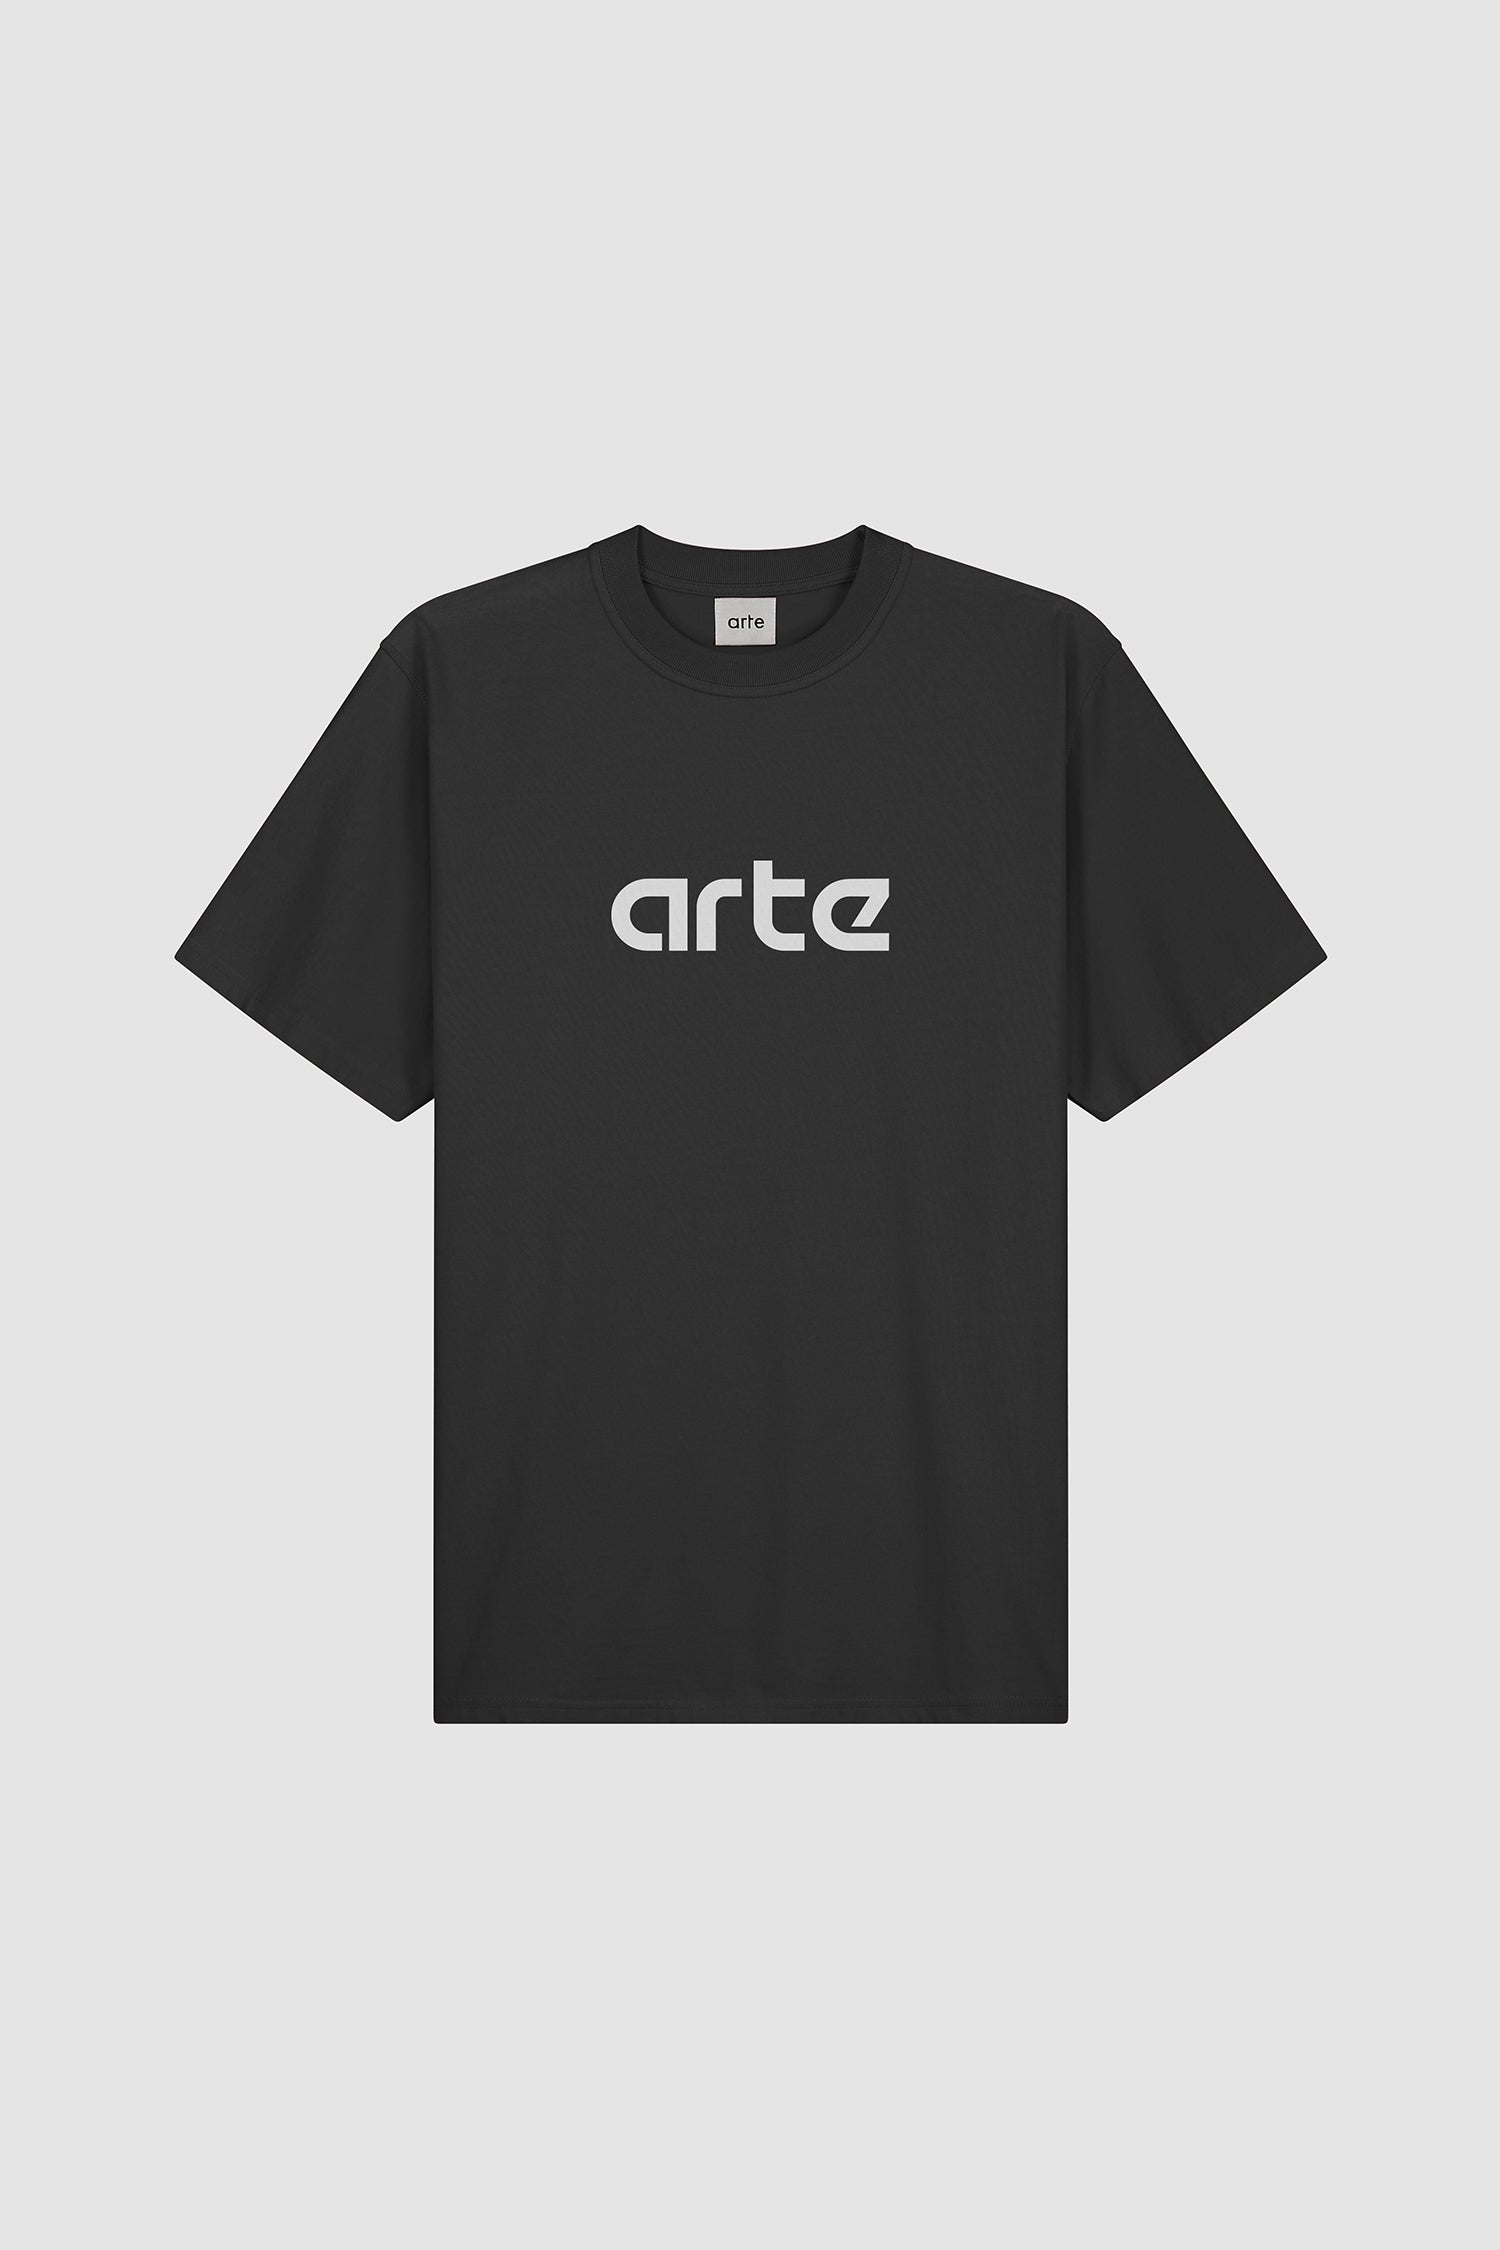 Teo Arte T-shirt - Black